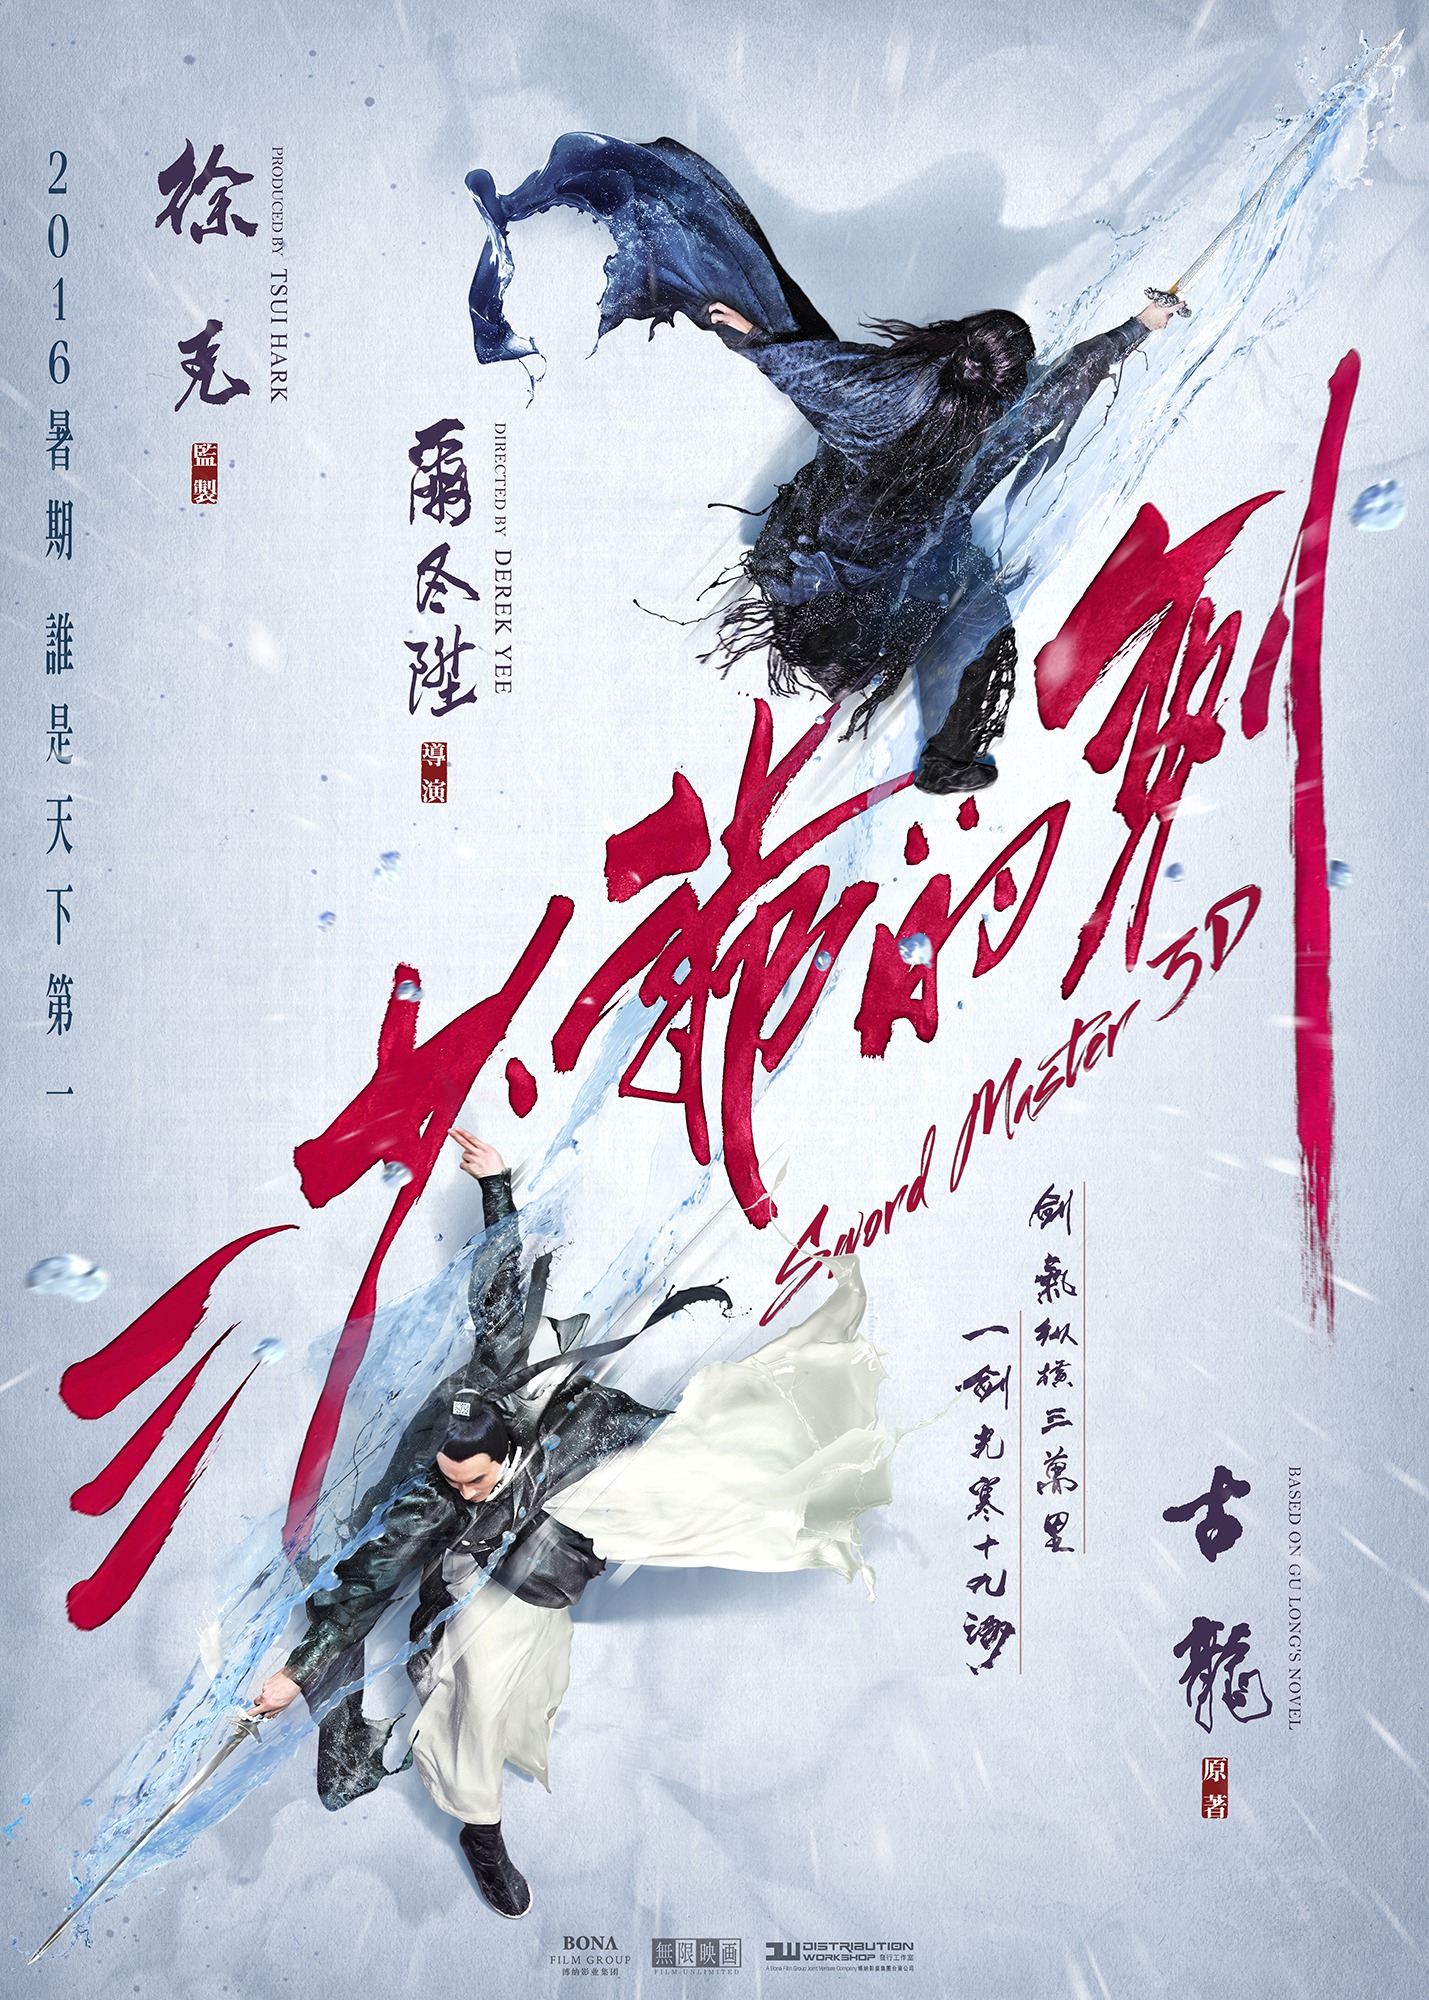 Mega Sized Movie Poster Image for San shao ye de jian (#10 of 11)